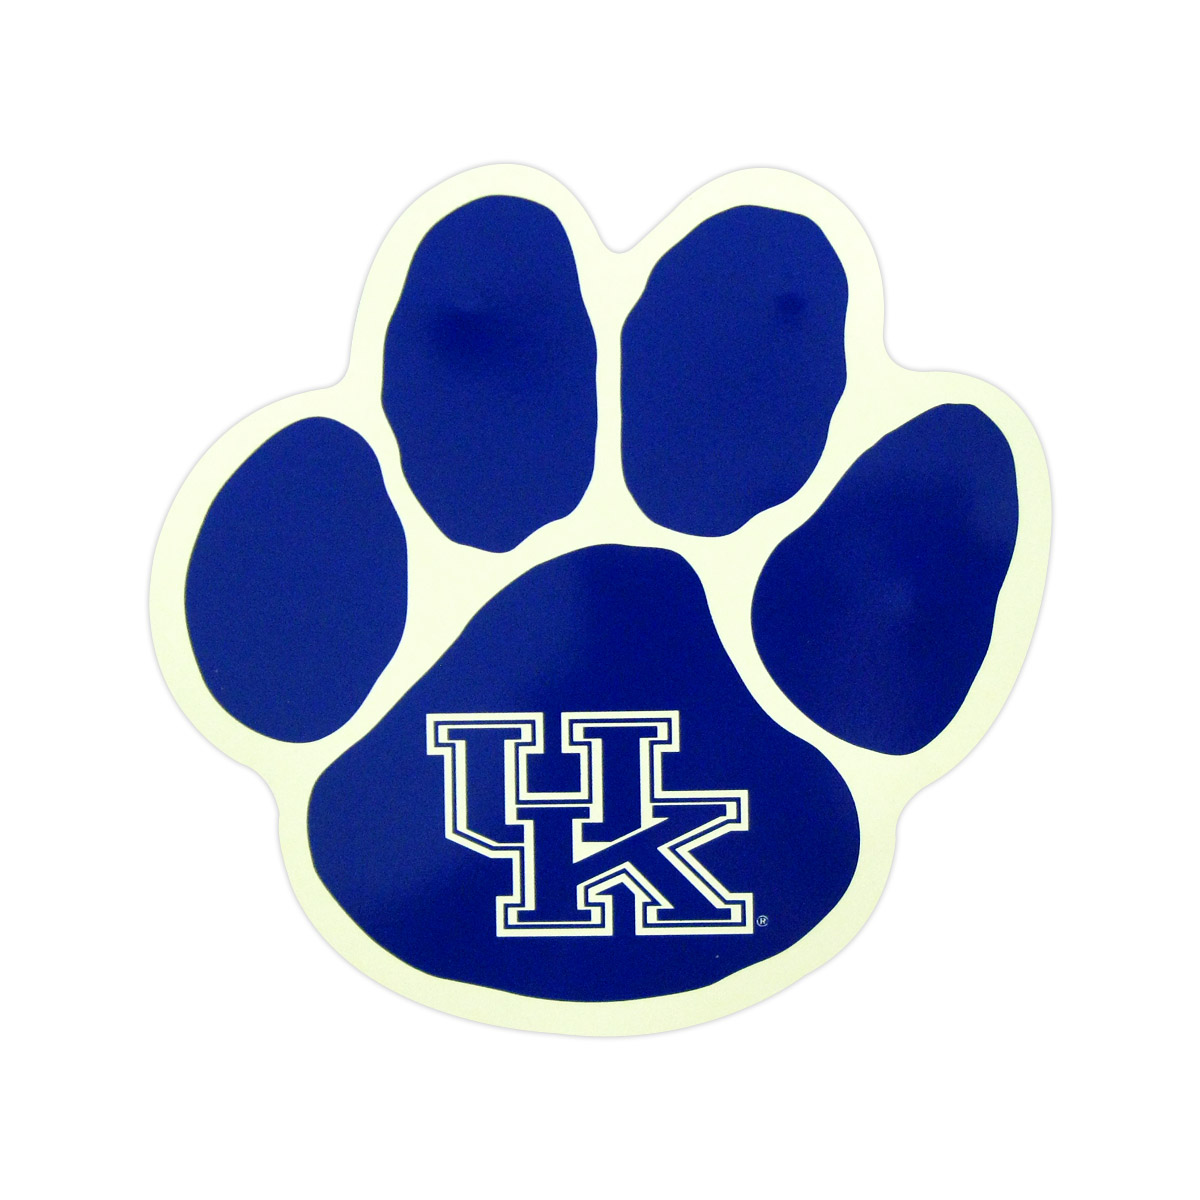 University Of Kentucky Clip Art Cliparts co